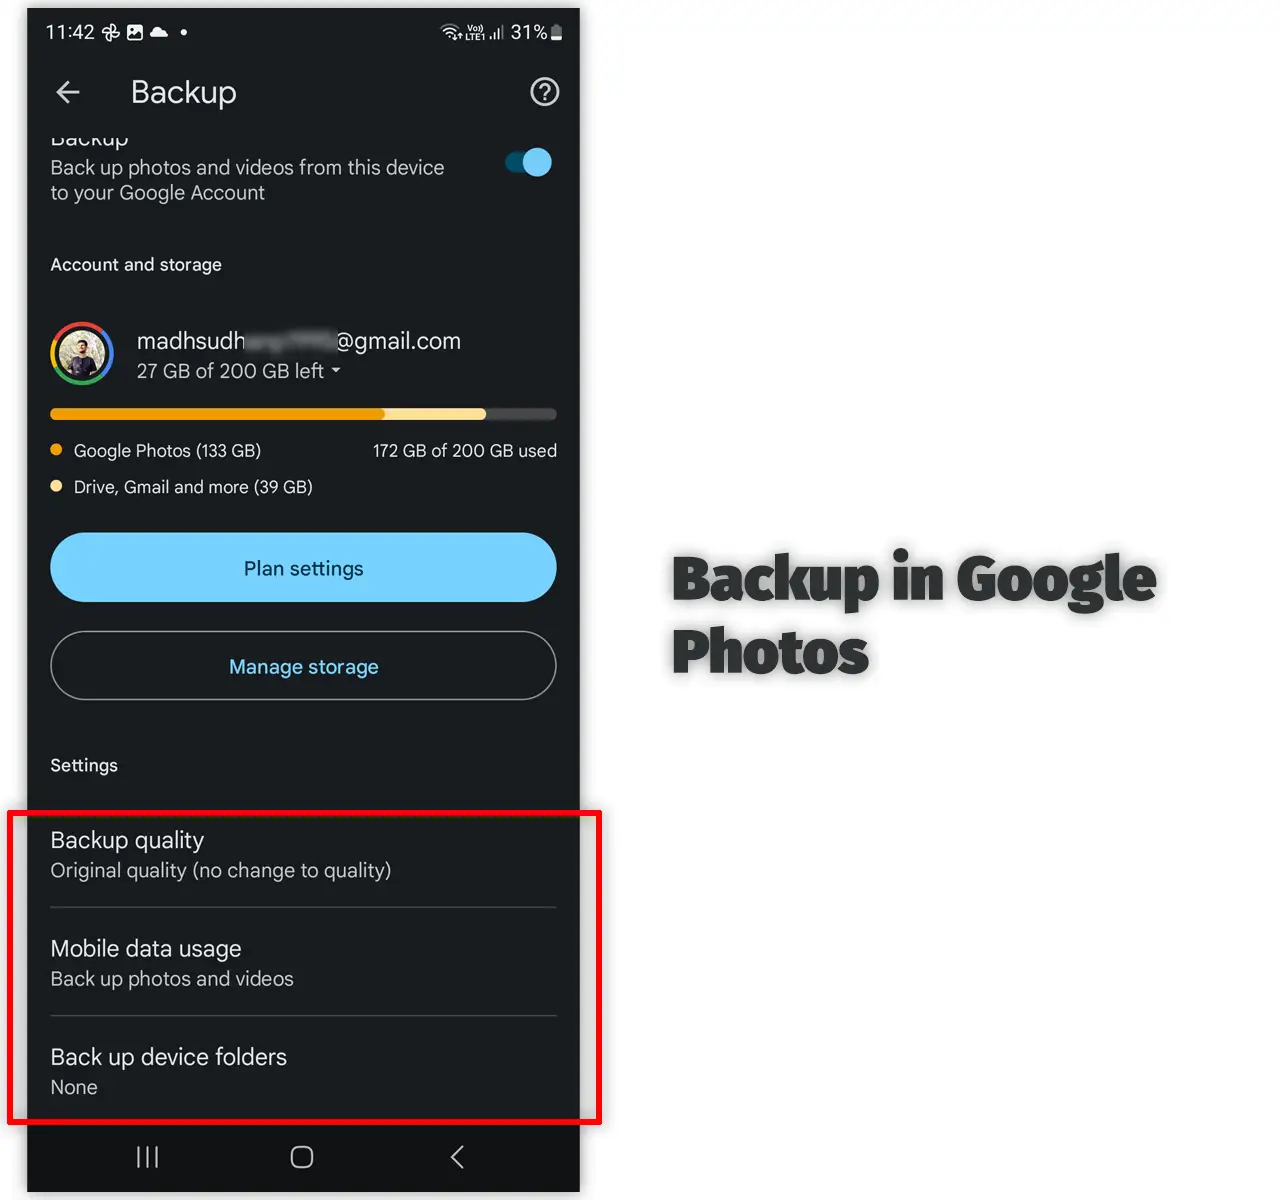 Backup in Google Photos